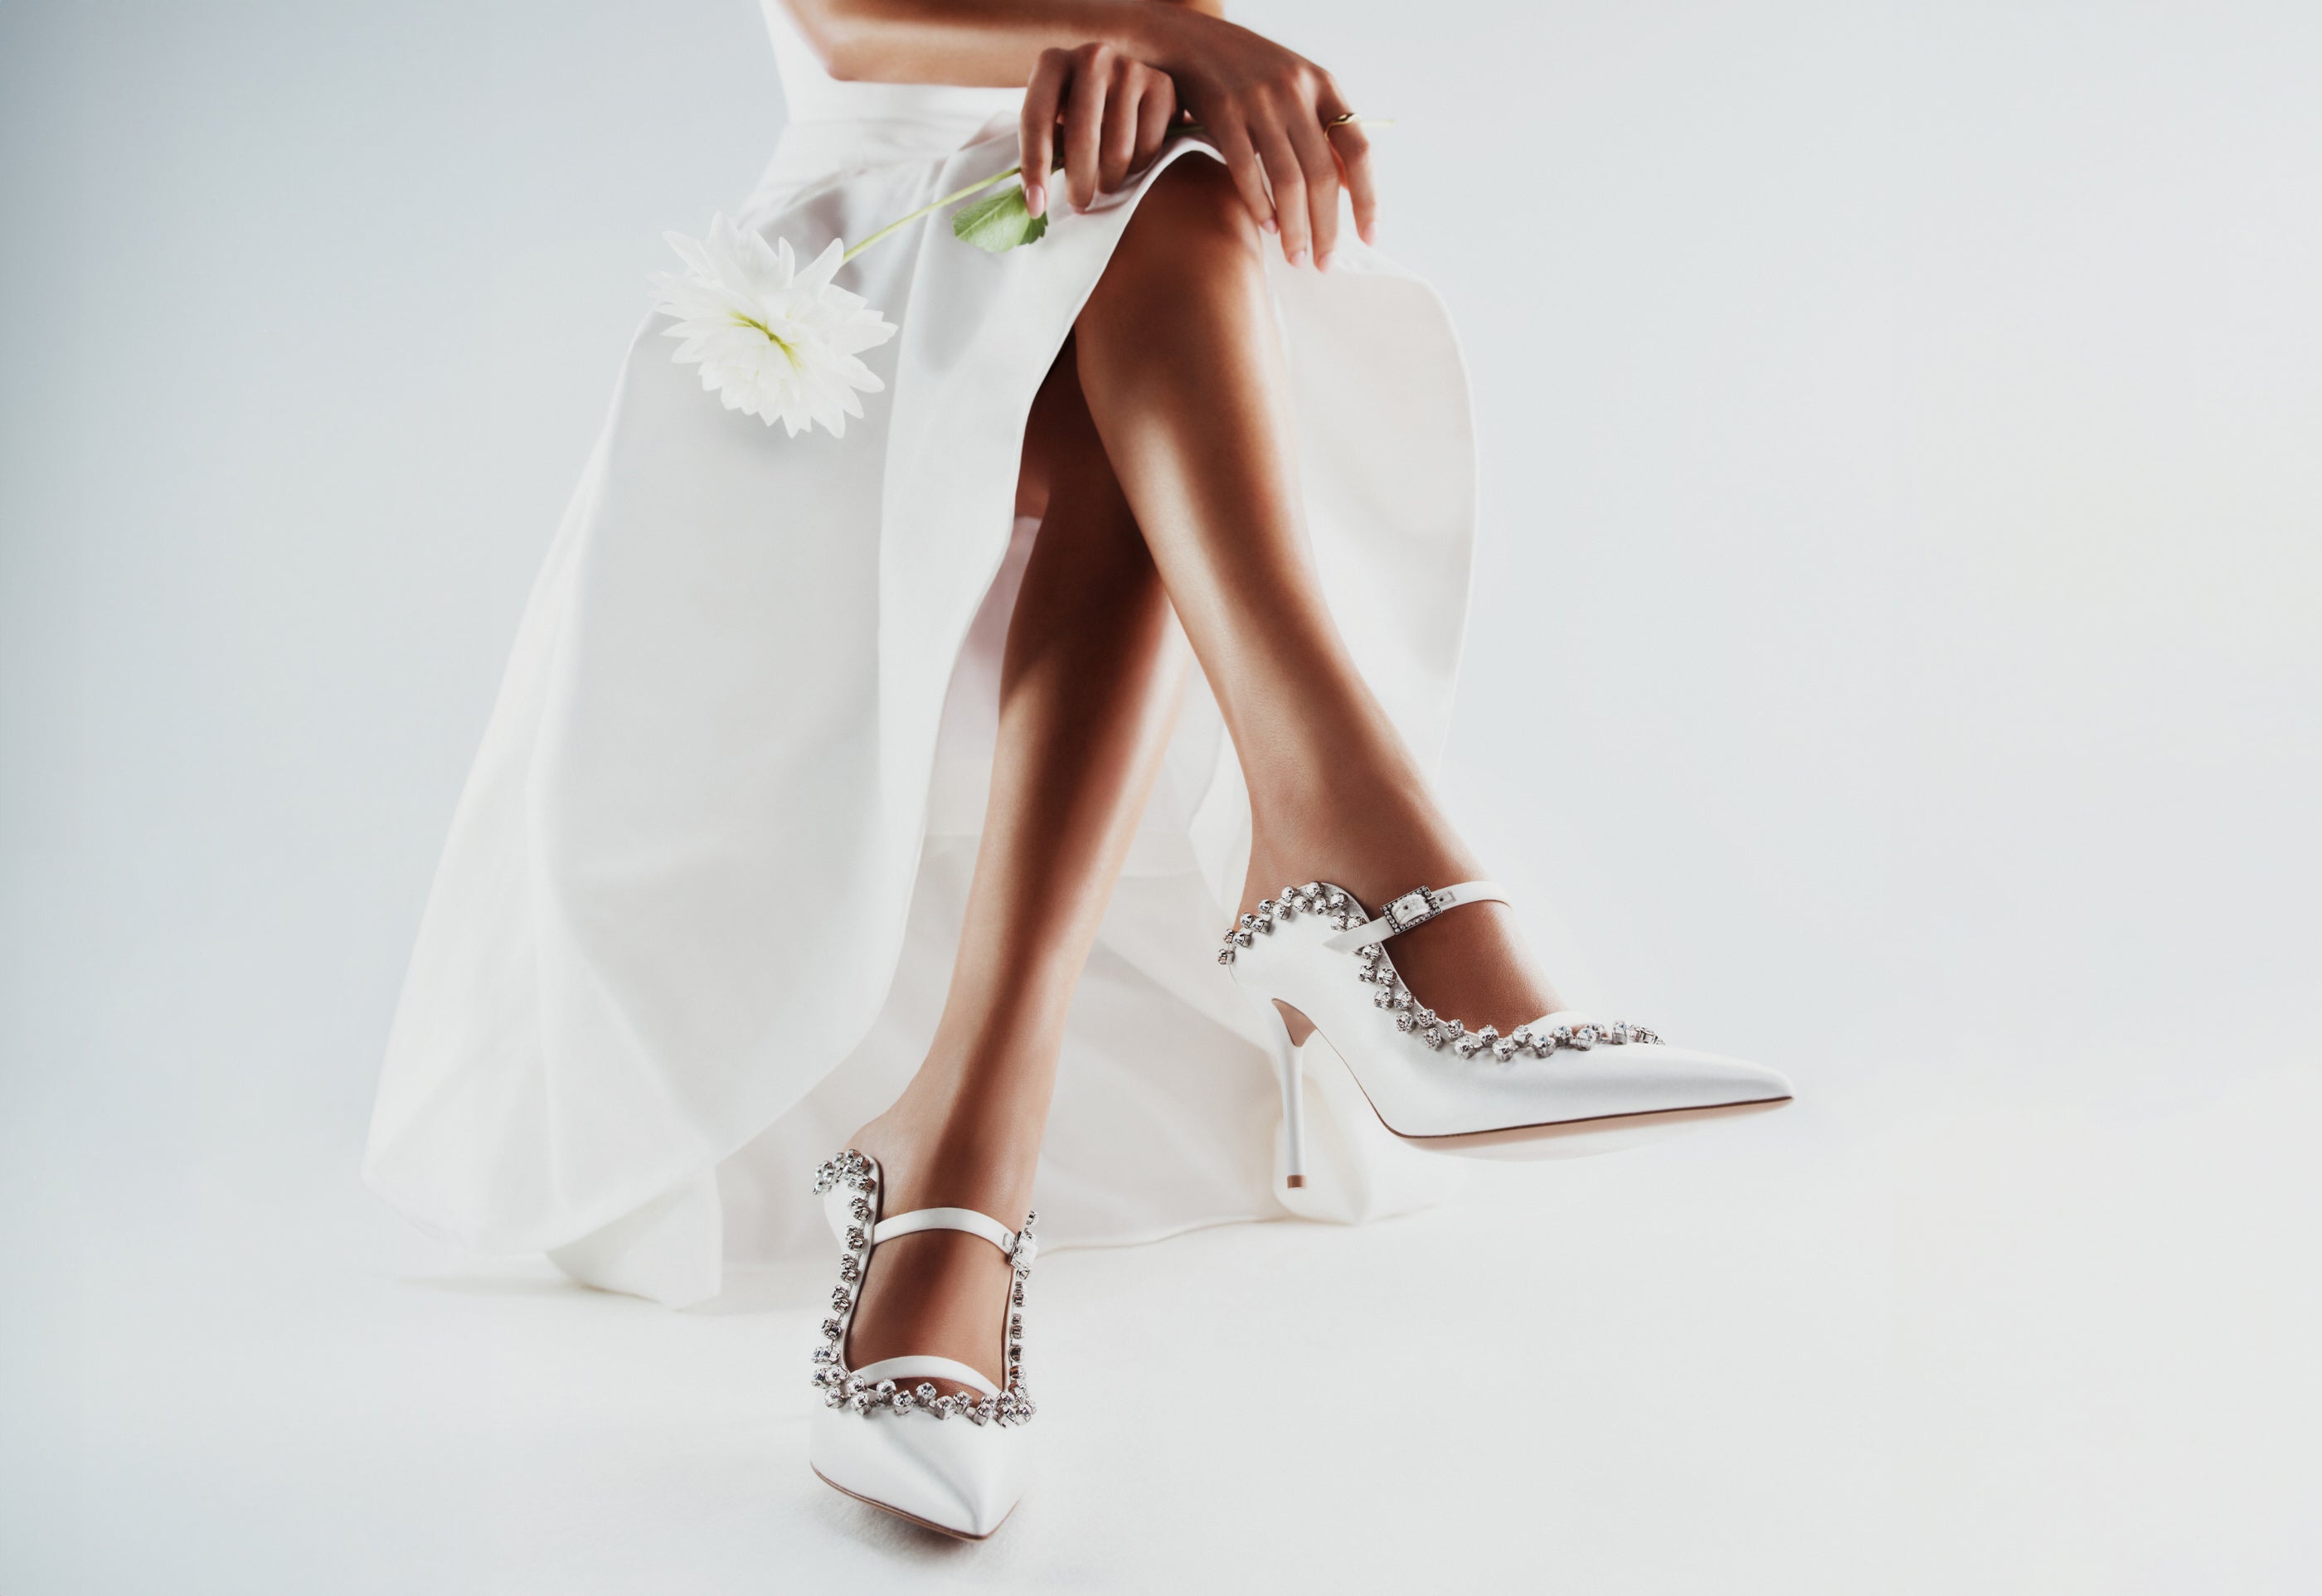 Women's luxury Bridal 85mm White Satin Heeled Mules Malone Souliers